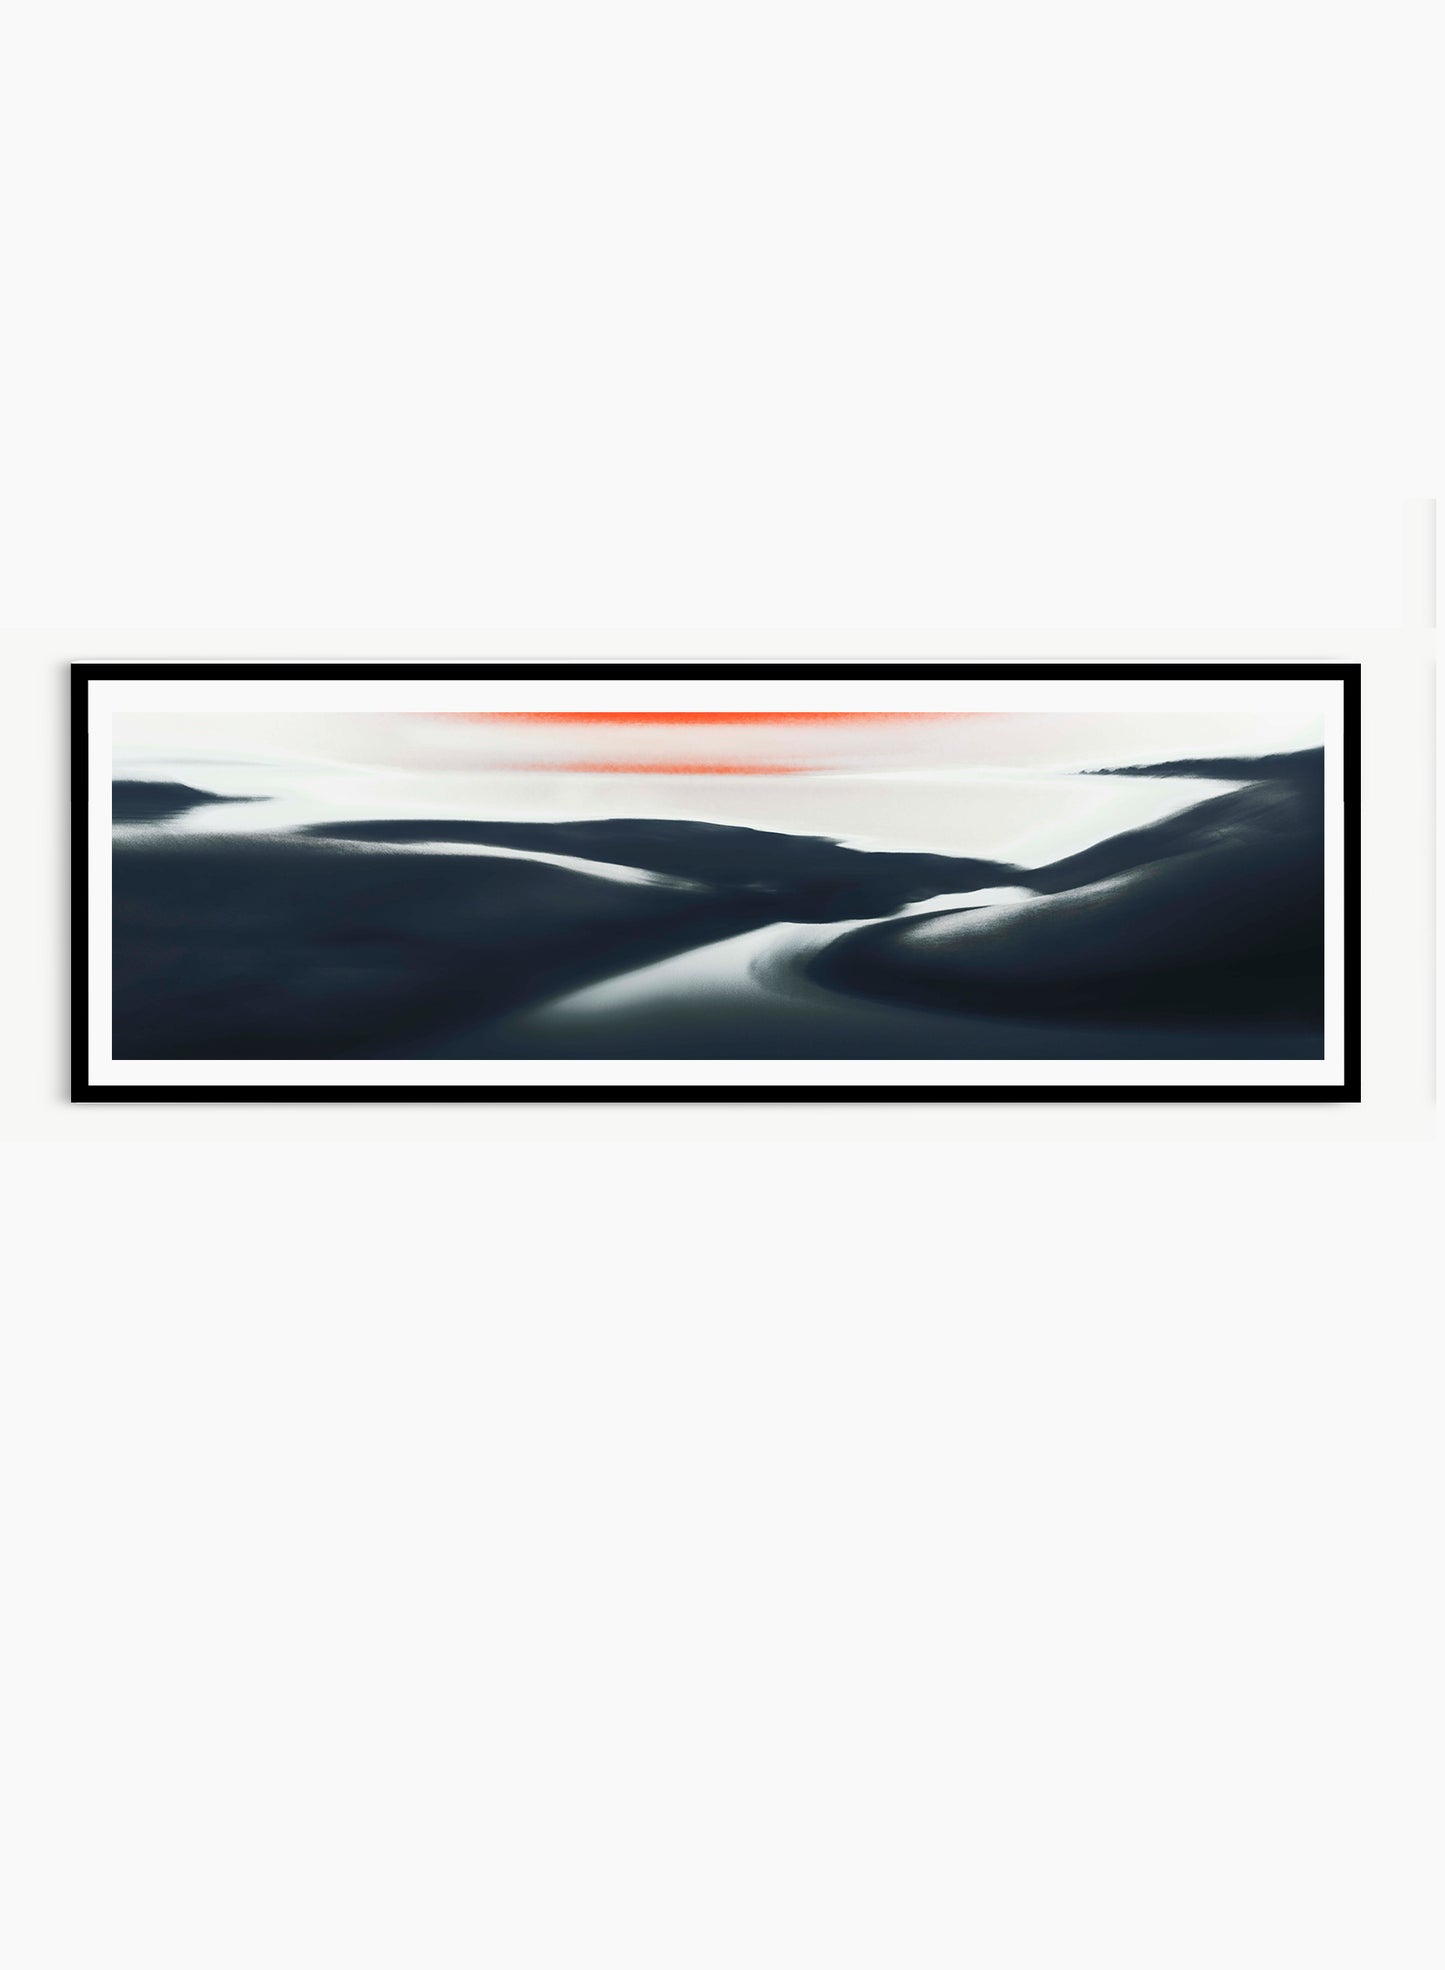 Archipelago, 94 x 27 cm, 25 prints